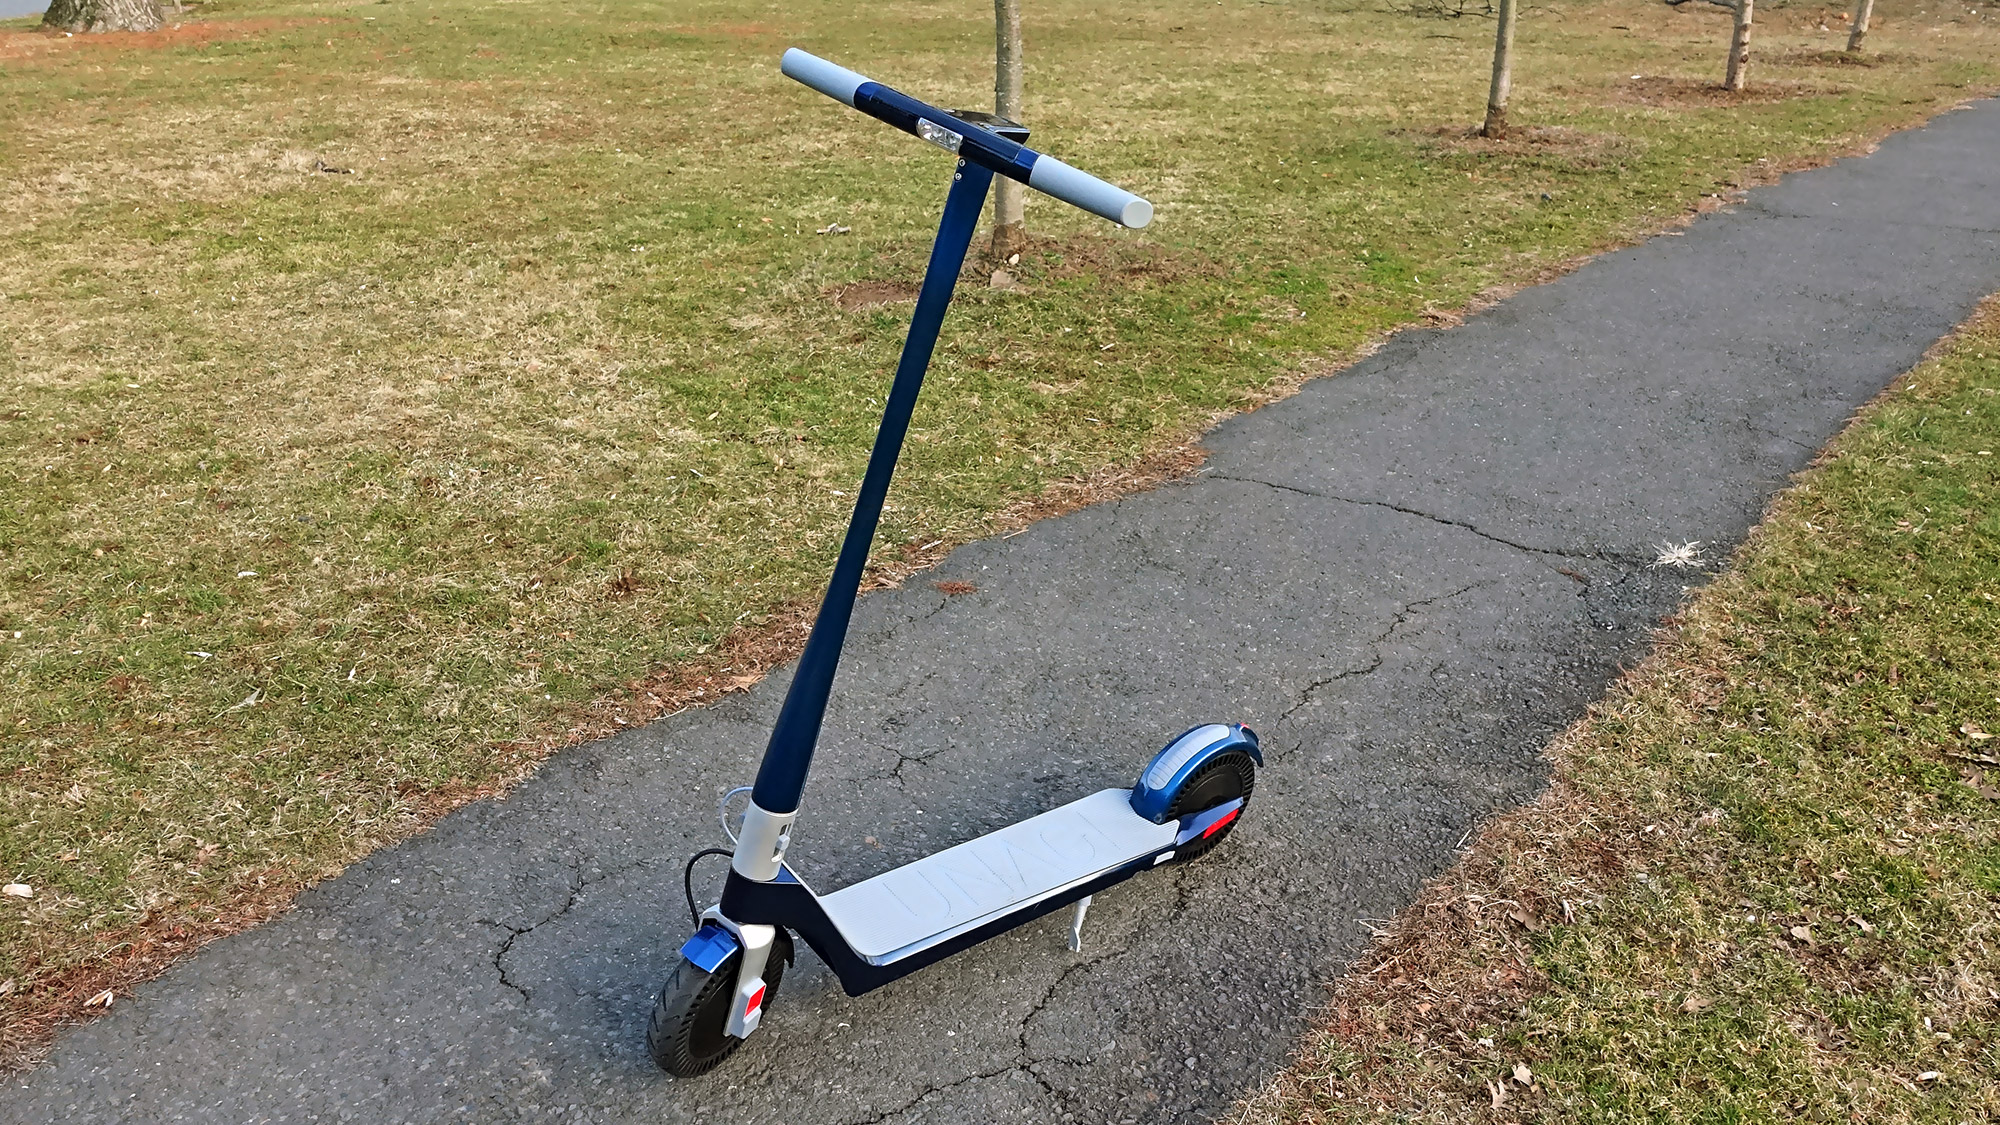 Unagi Model One electric scooter